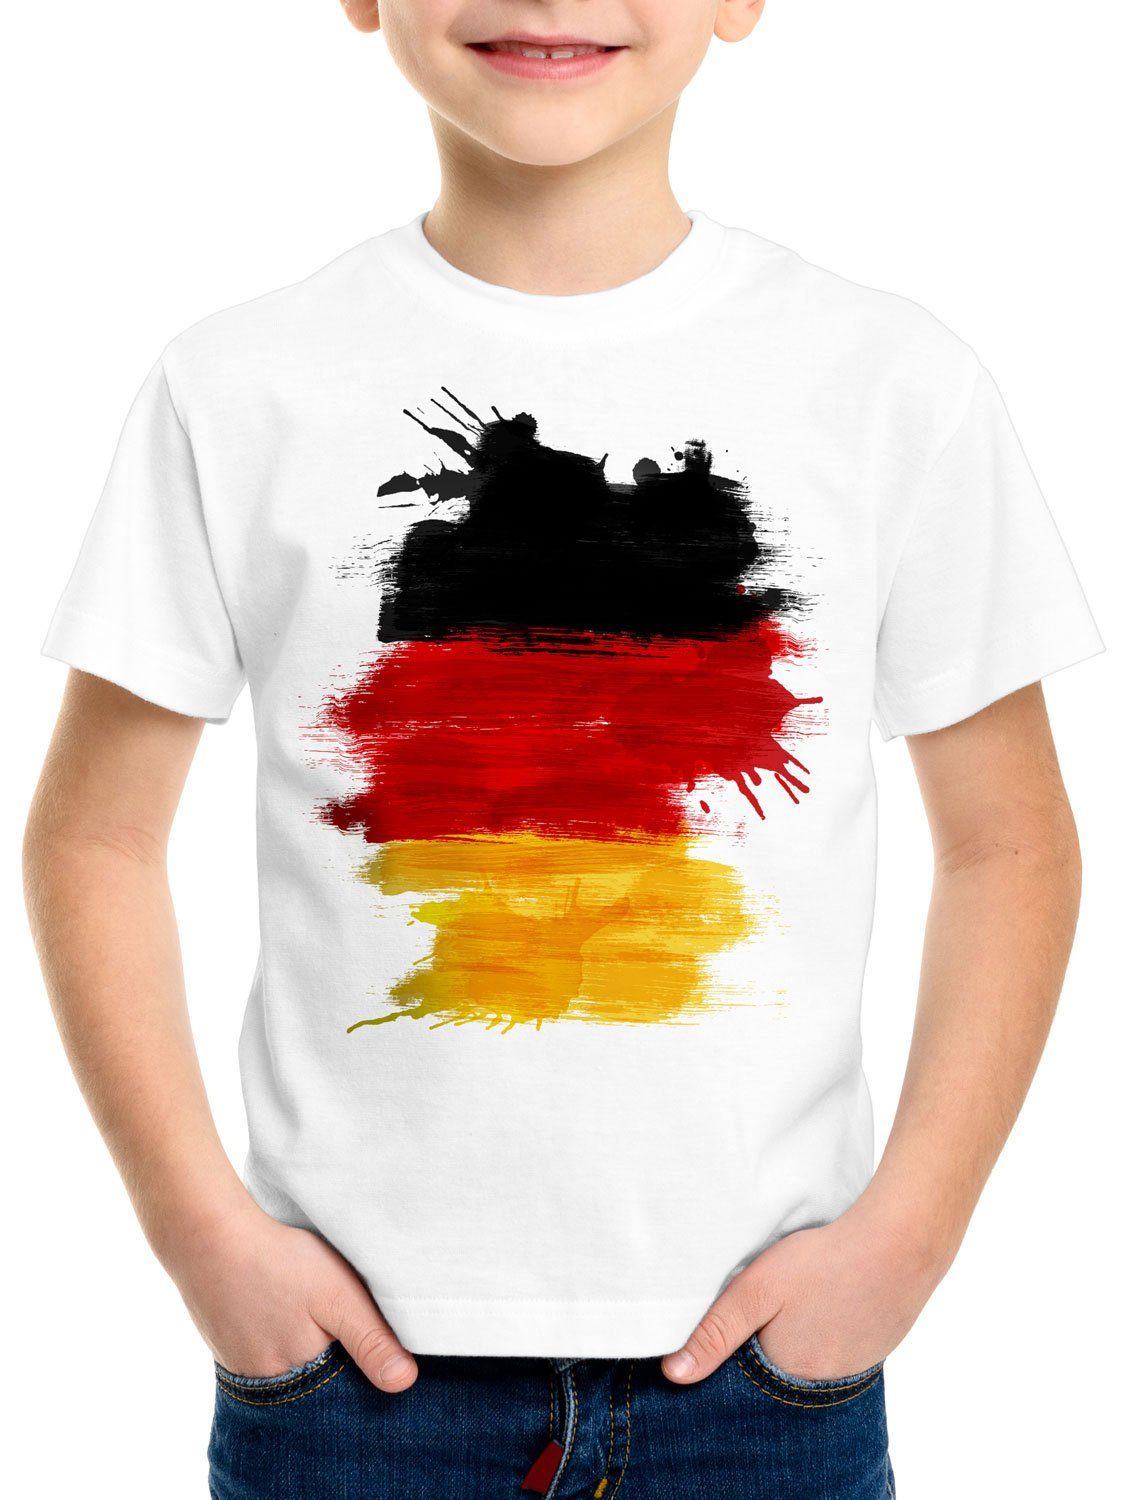 style3 Print-Shirt Kinder T-Shirt Flagge Germany Fahne Deutschland Fußball Sport weiß WM EM